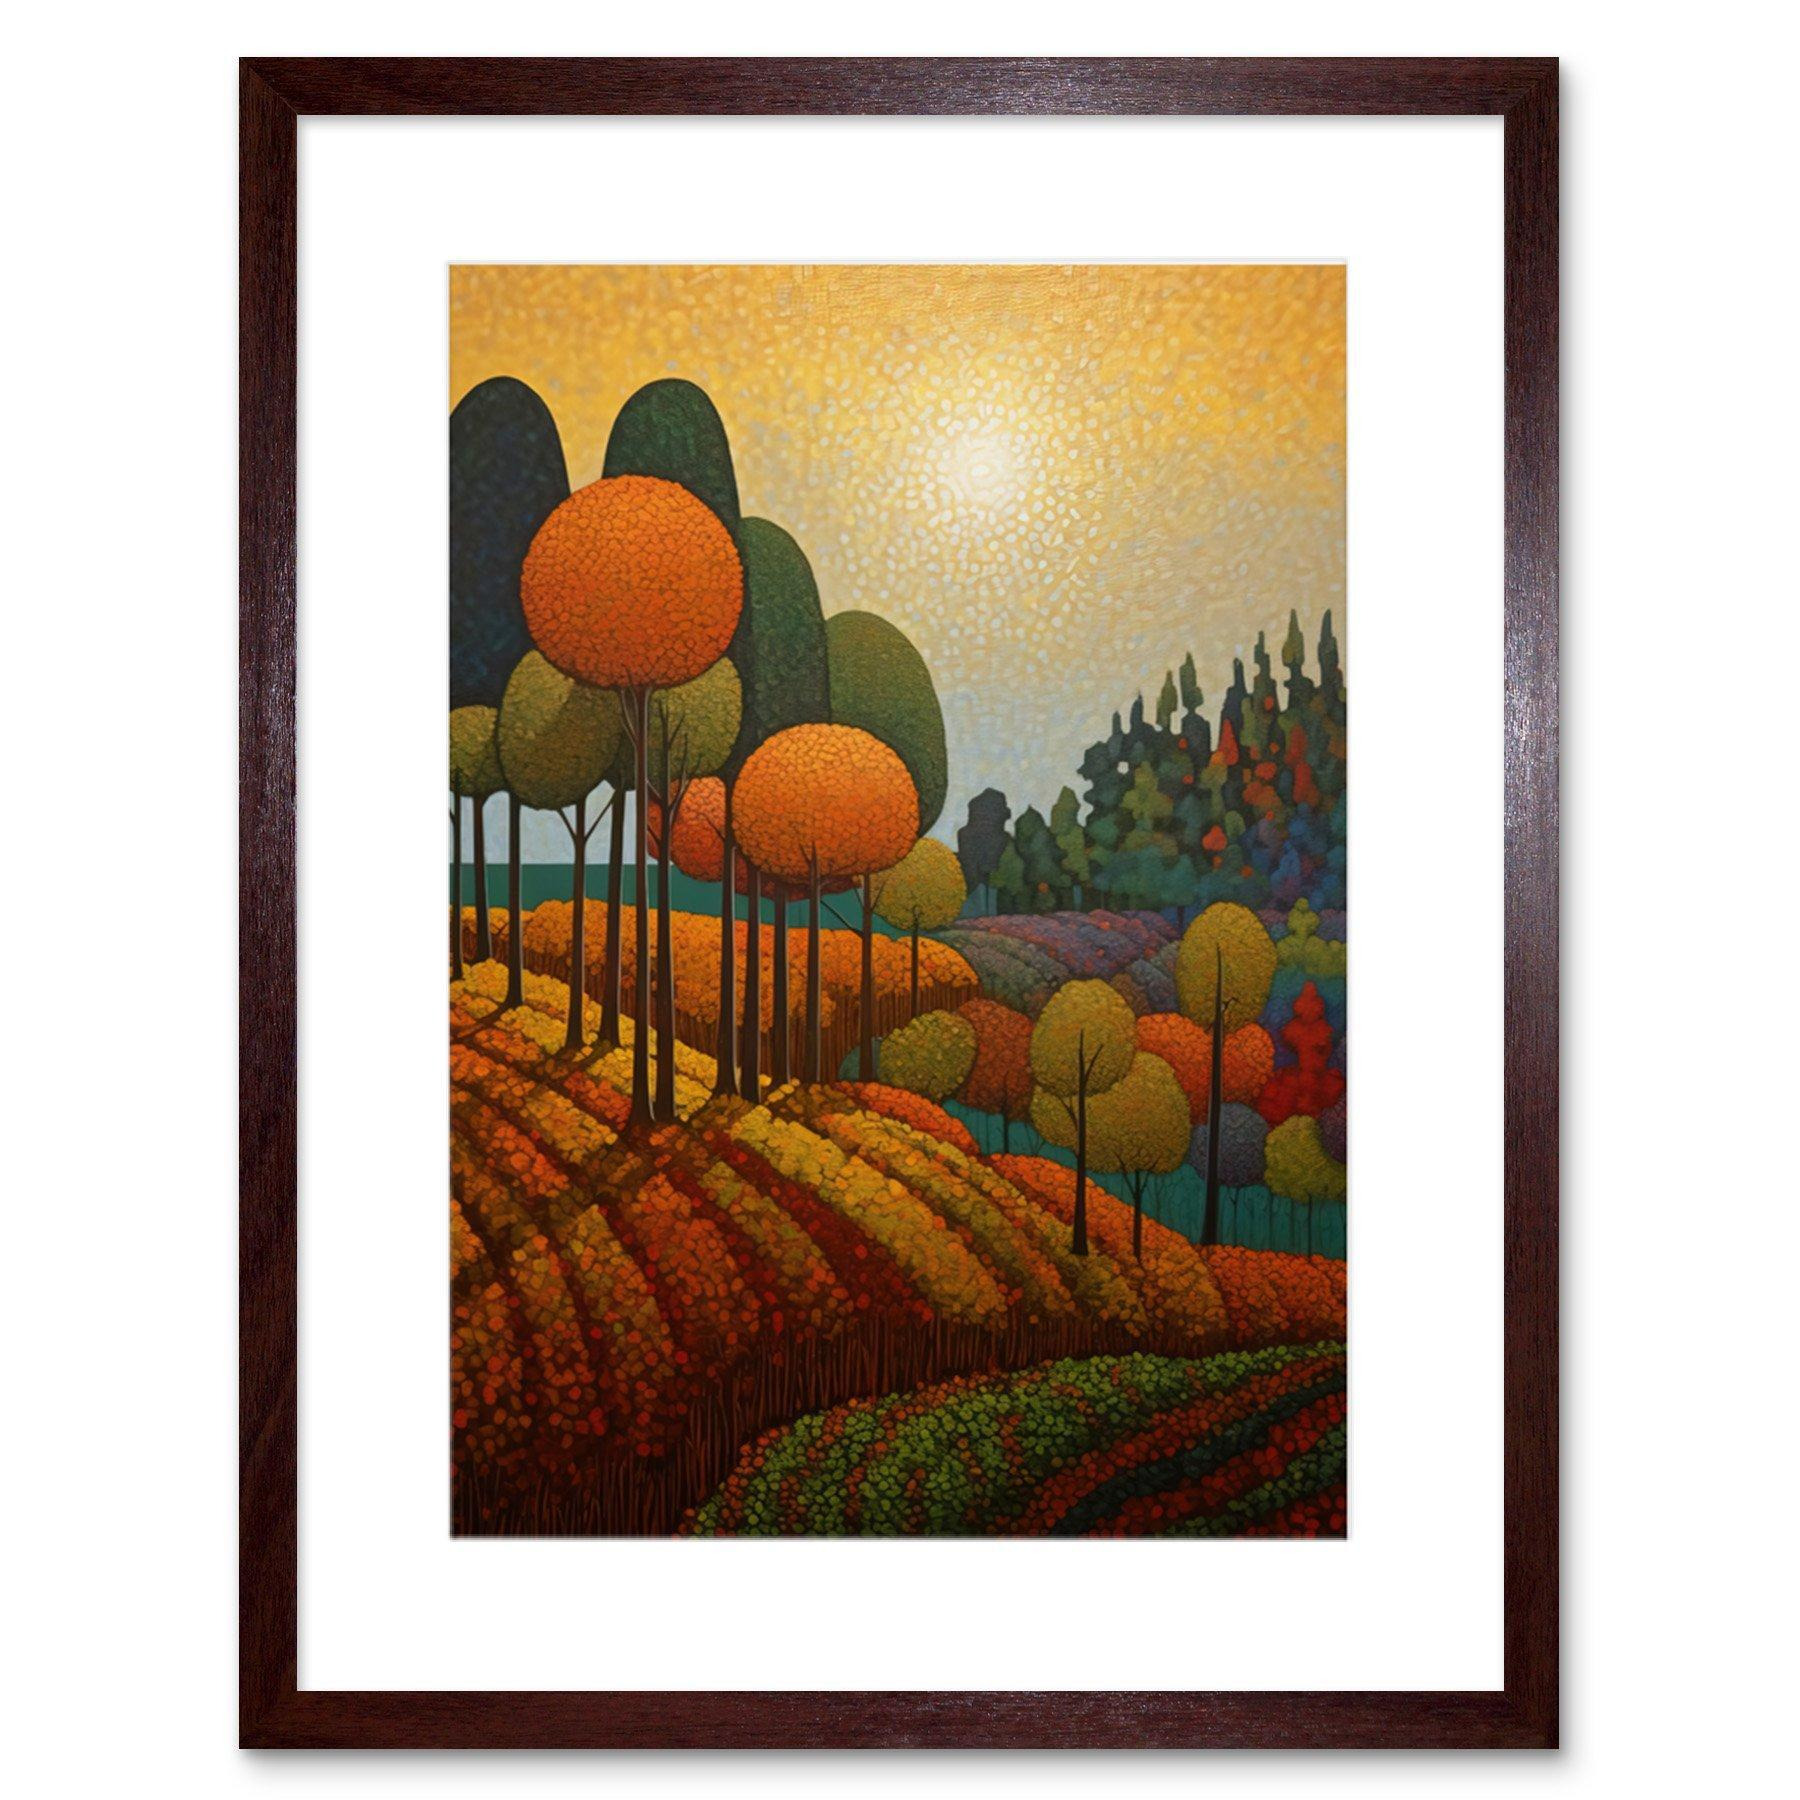 Autumn Fields Pointillism Painting Amber Orange Green Countryside Landscape Artwork Framed Wall Art Print 9X7 Inch - image 1